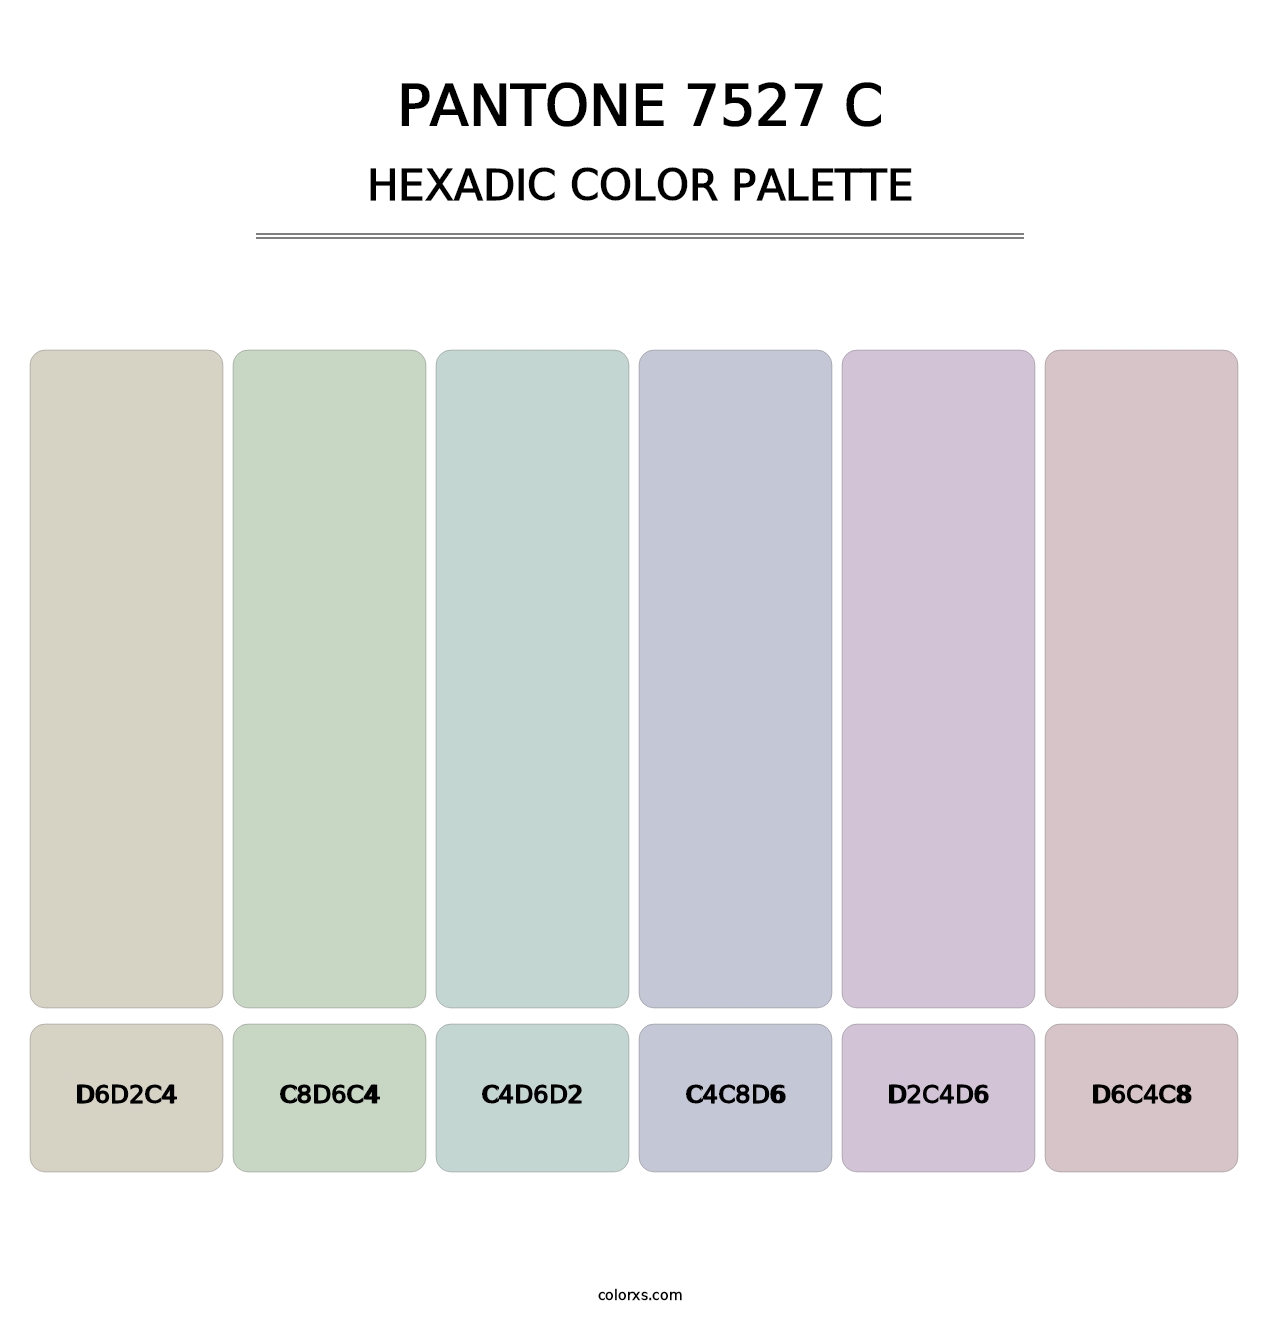 PANTONE 7527 C - Hexadic Color Palette